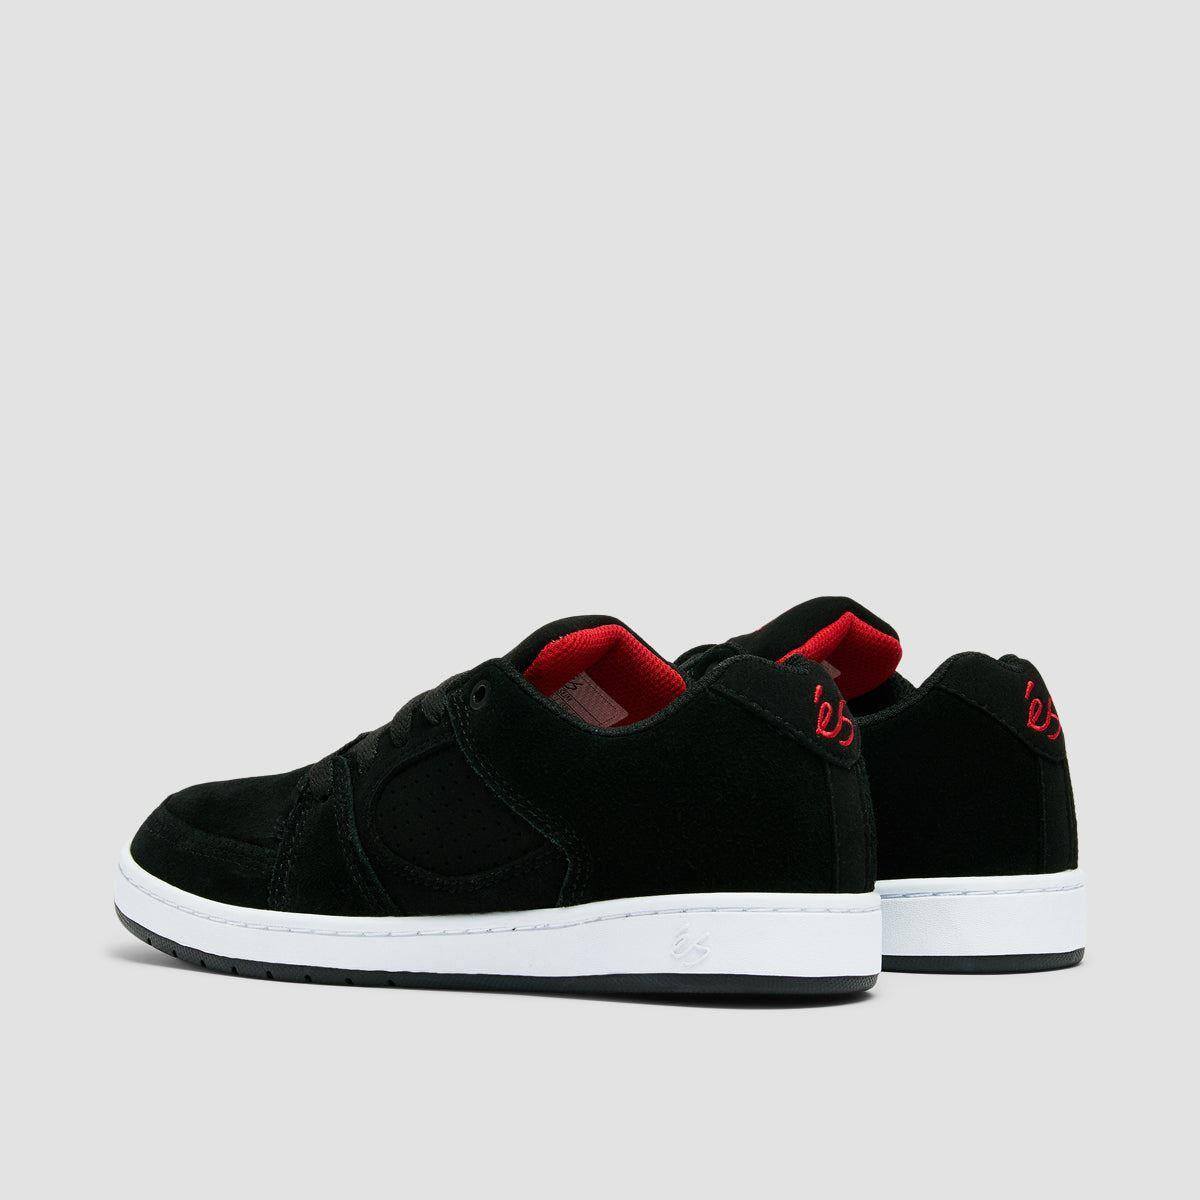 eS Accel Slim Shoes - Black/Black/Red